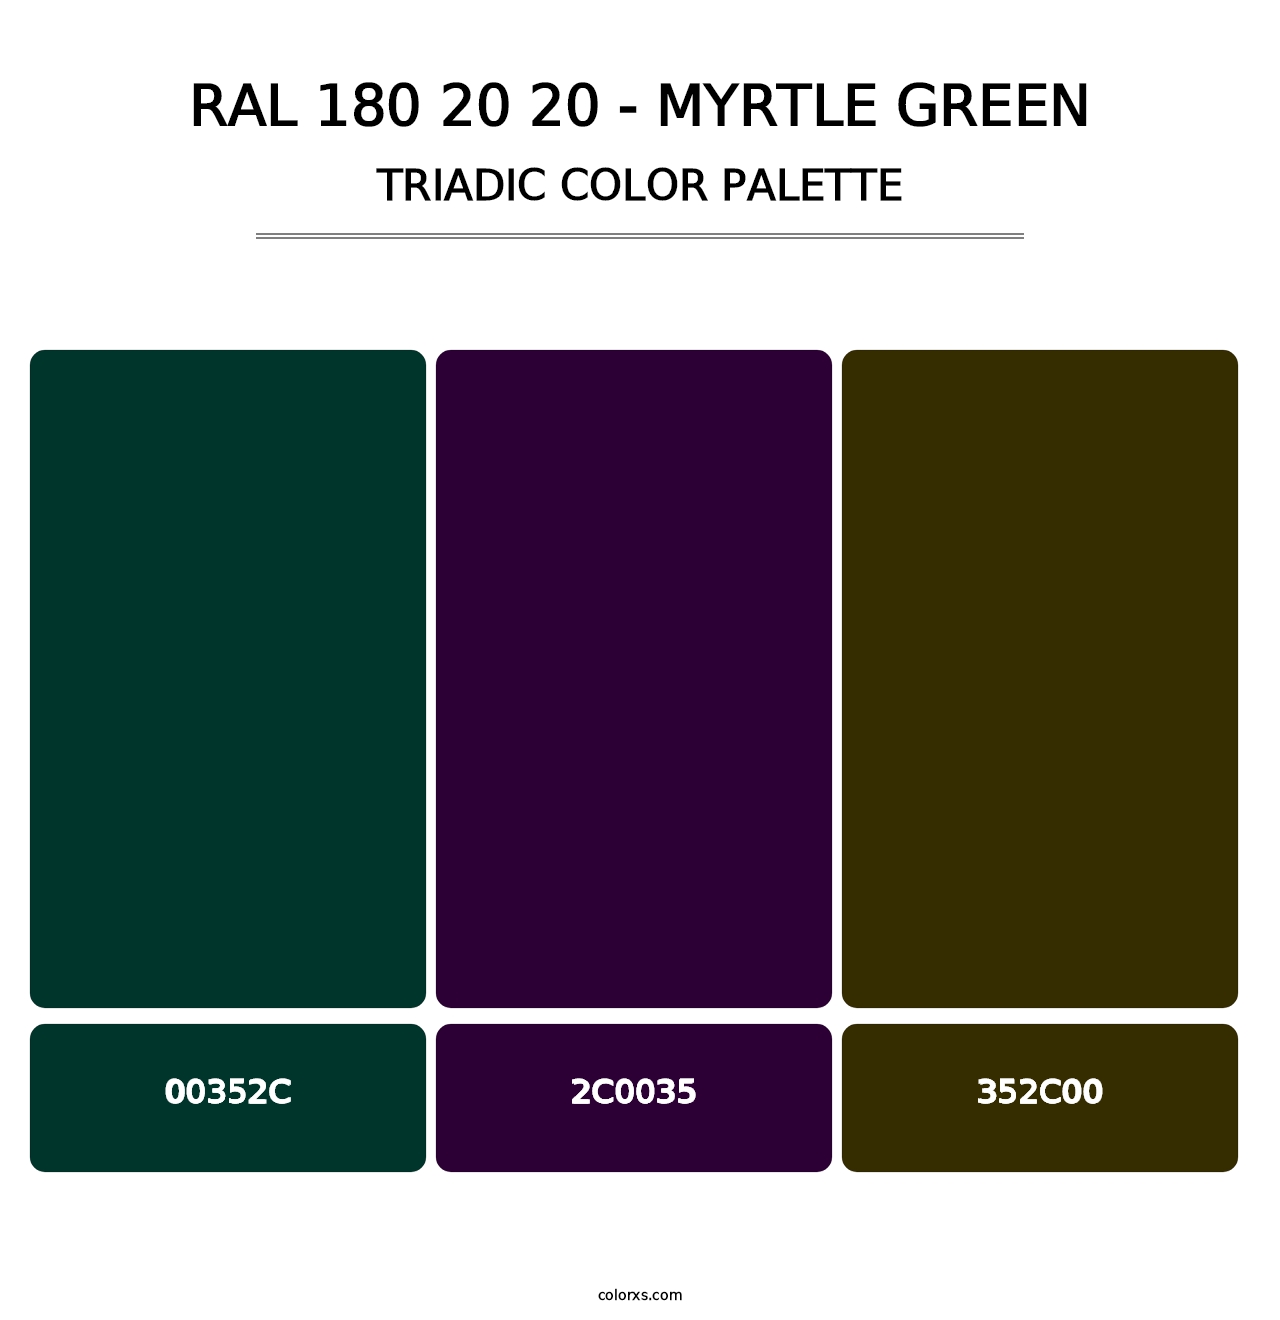 RAL 180 20 20 - Myrtle Green - Triadic Color Palette